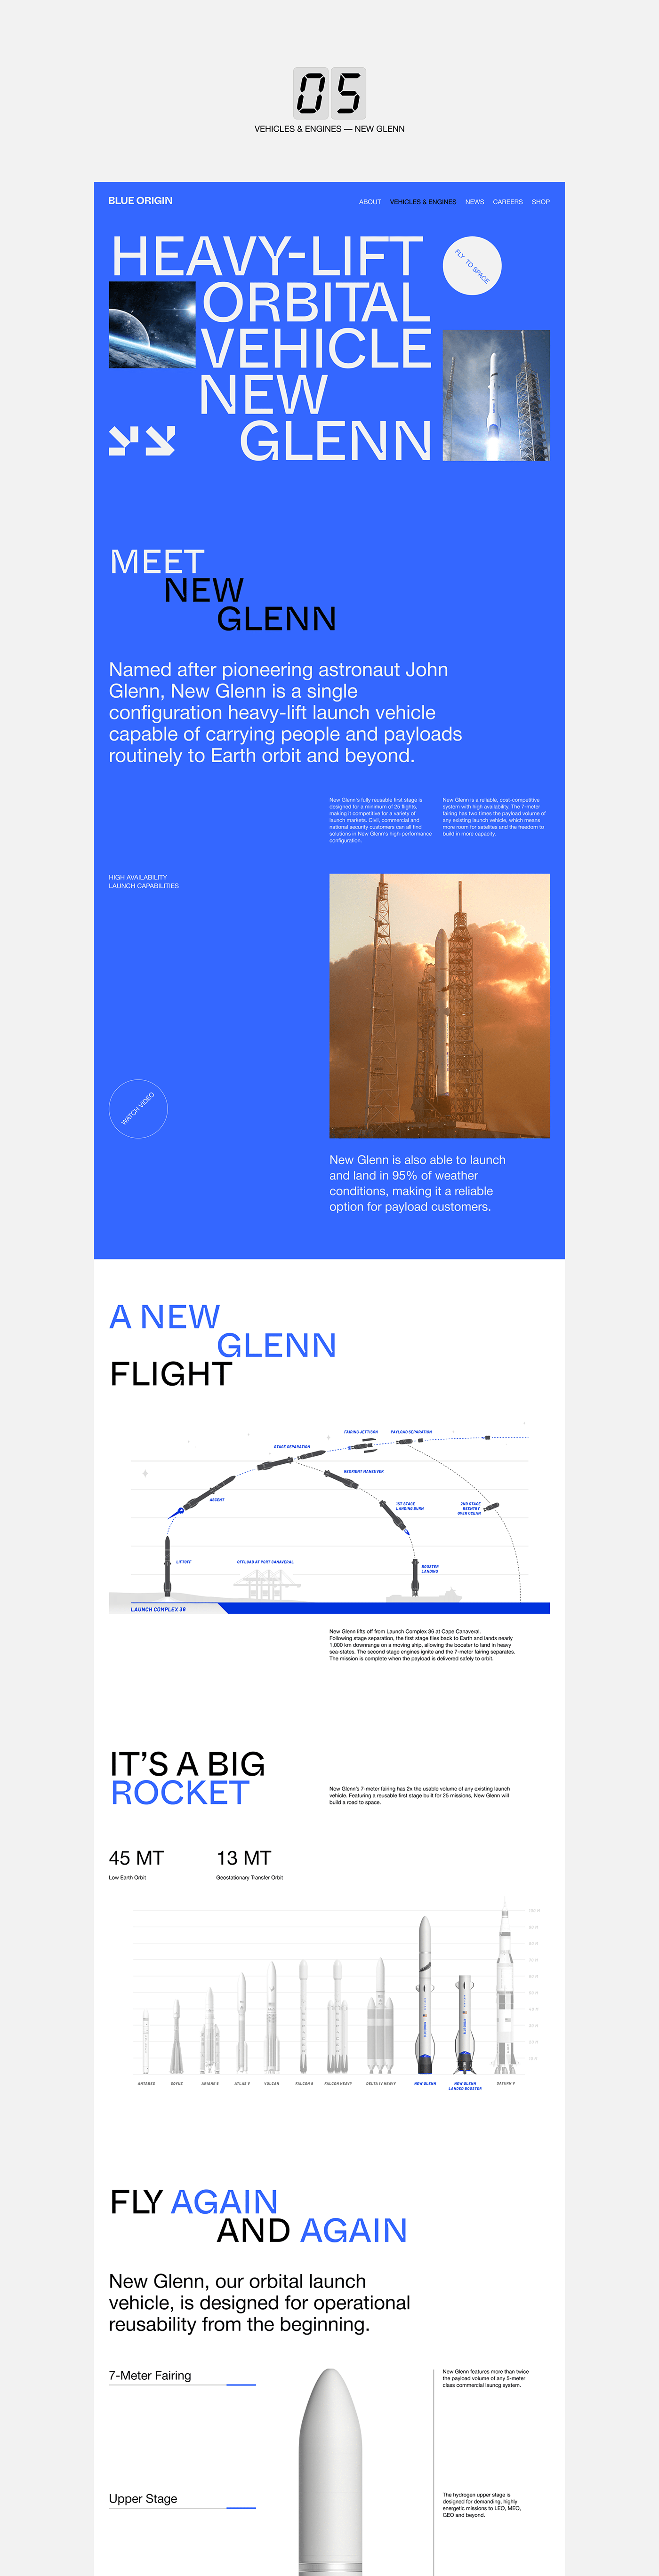 behancereview blueorigin inspiration Space  Webdesign